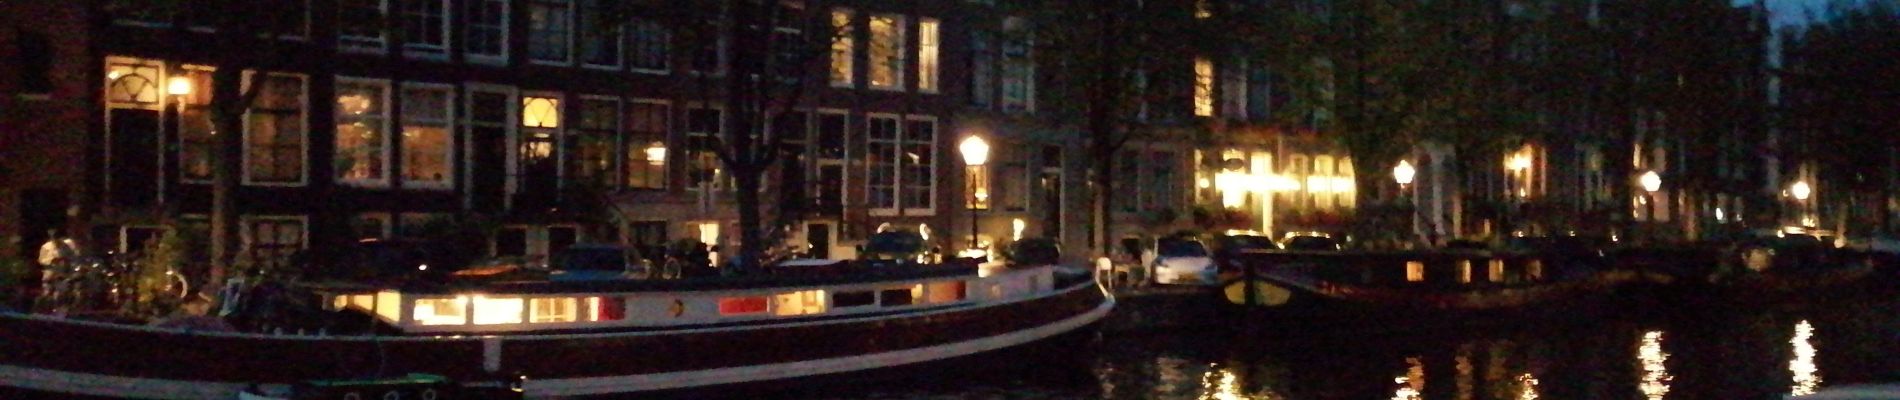 Tour Wandern Amsterdam - amsterdam - Photo